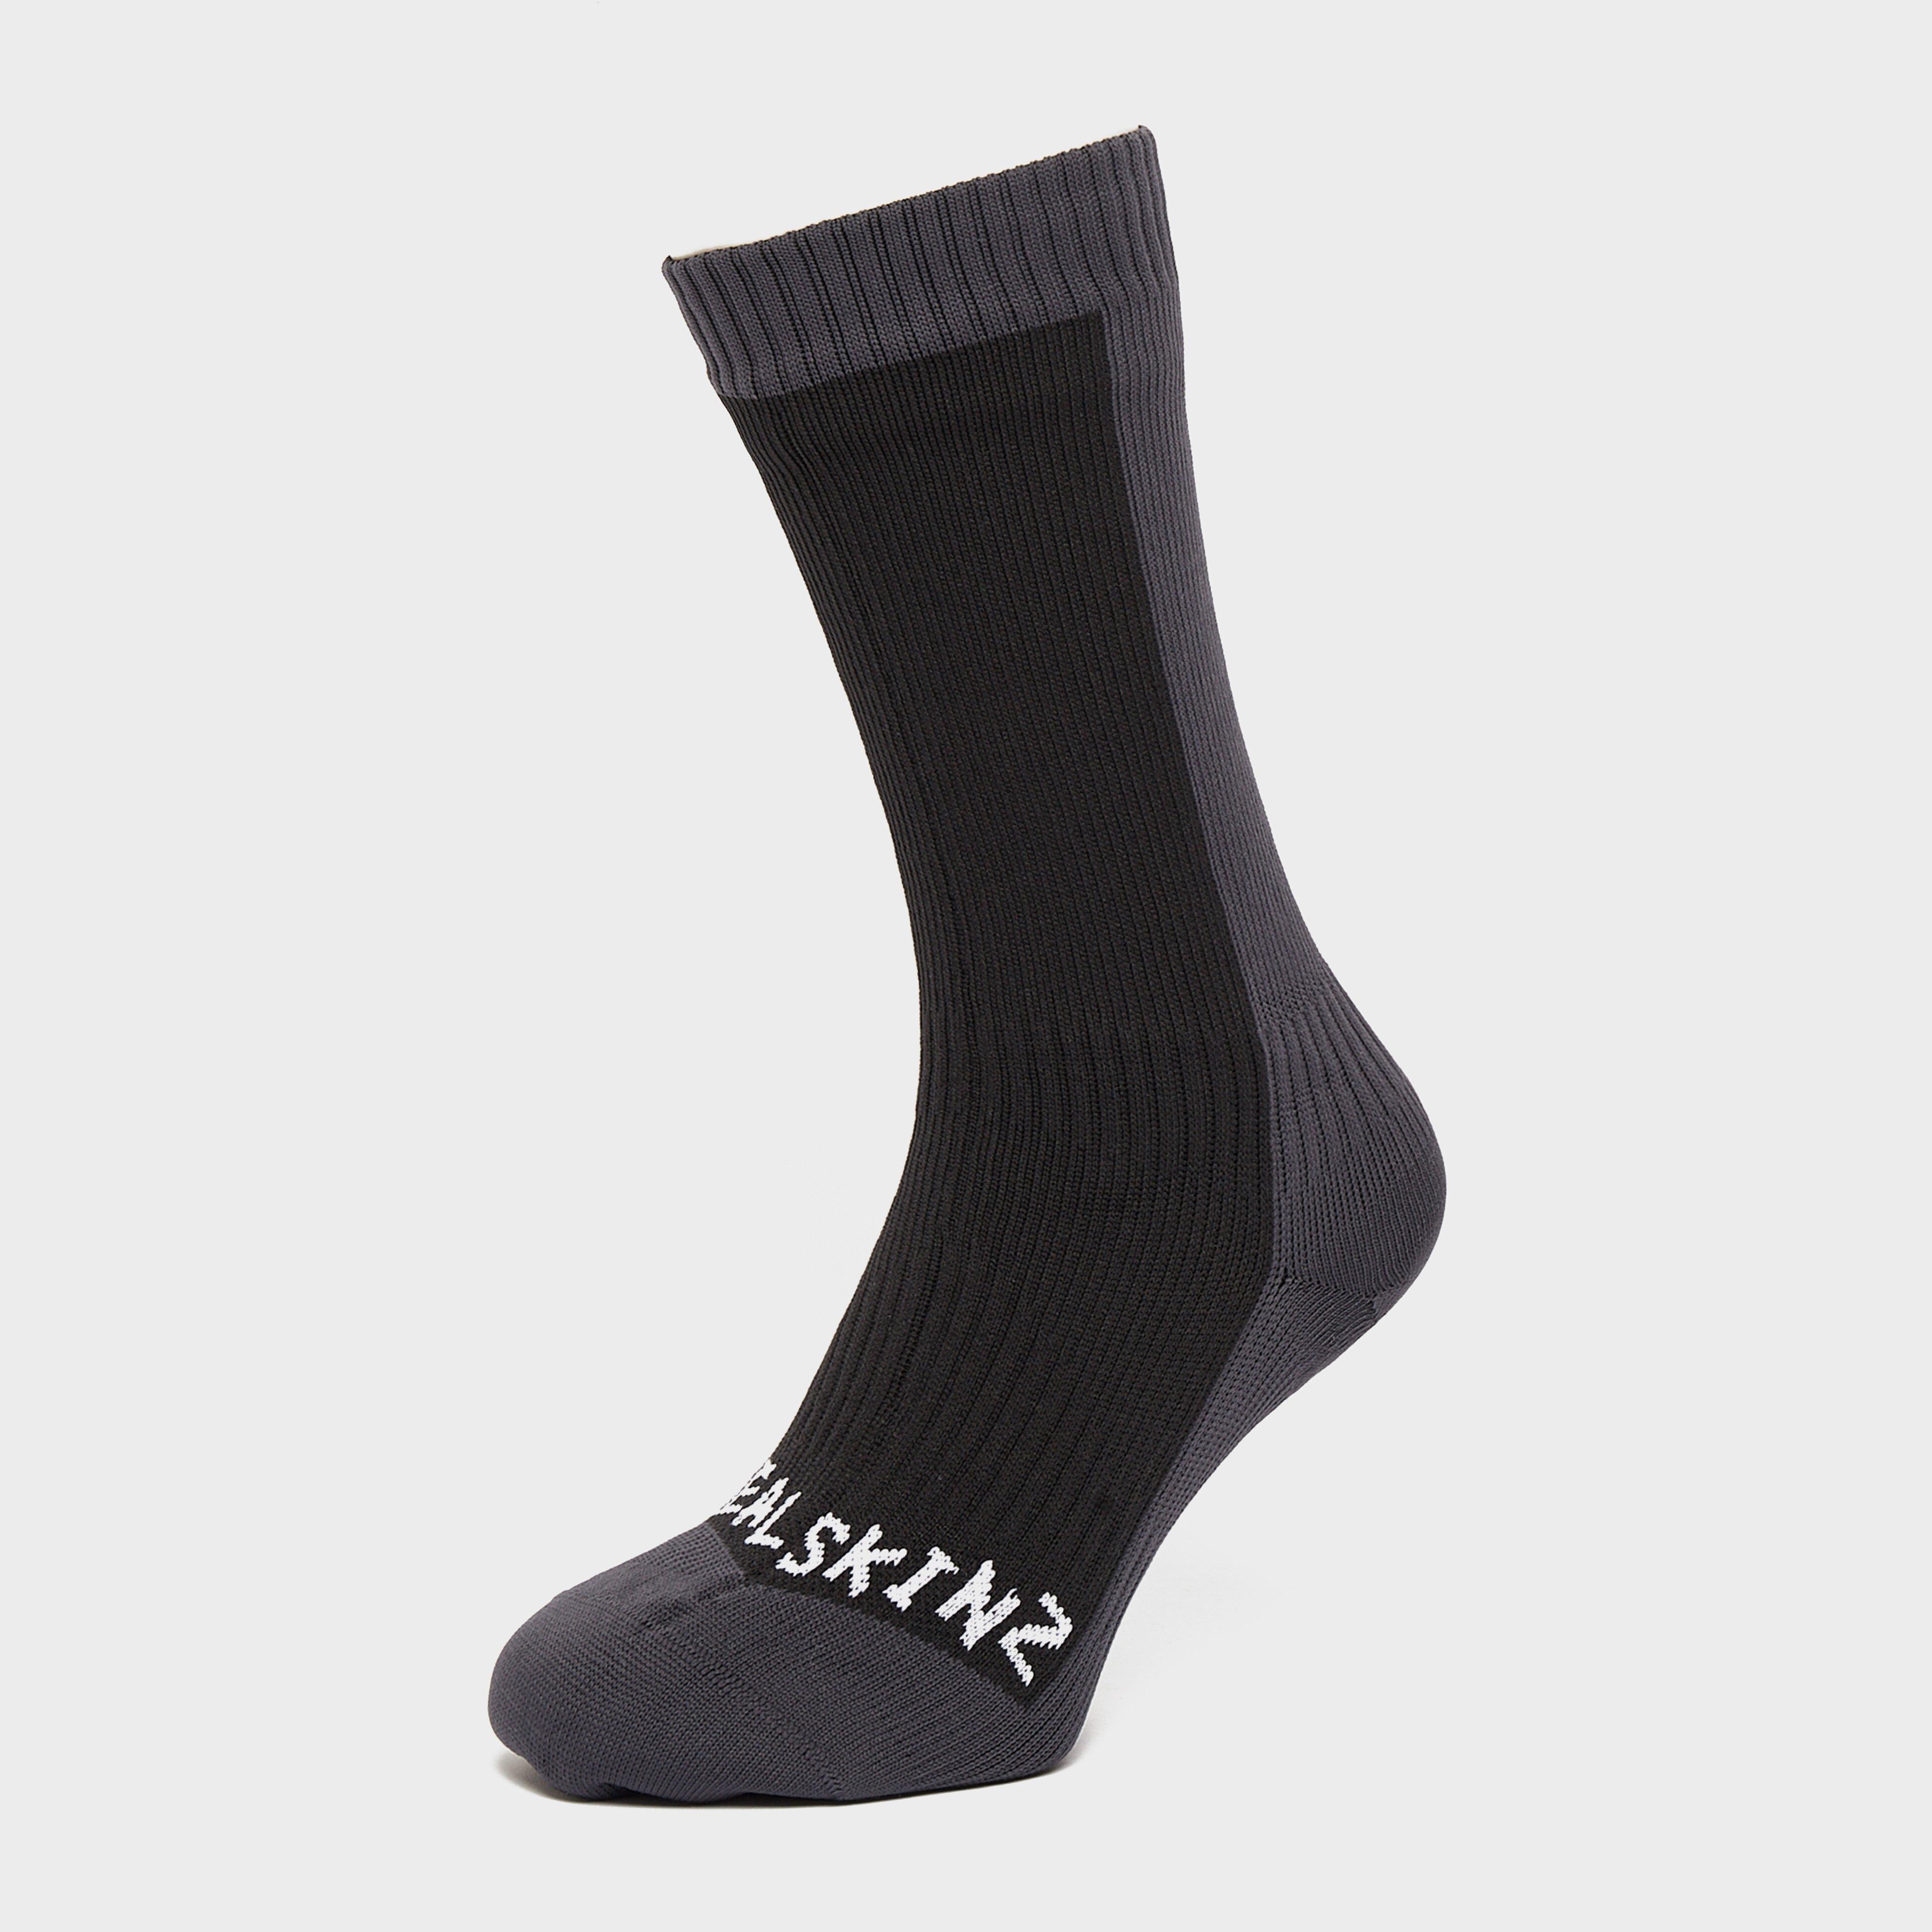  Sealskinz Waterproof Cold Weather Mid Length Sock, Black